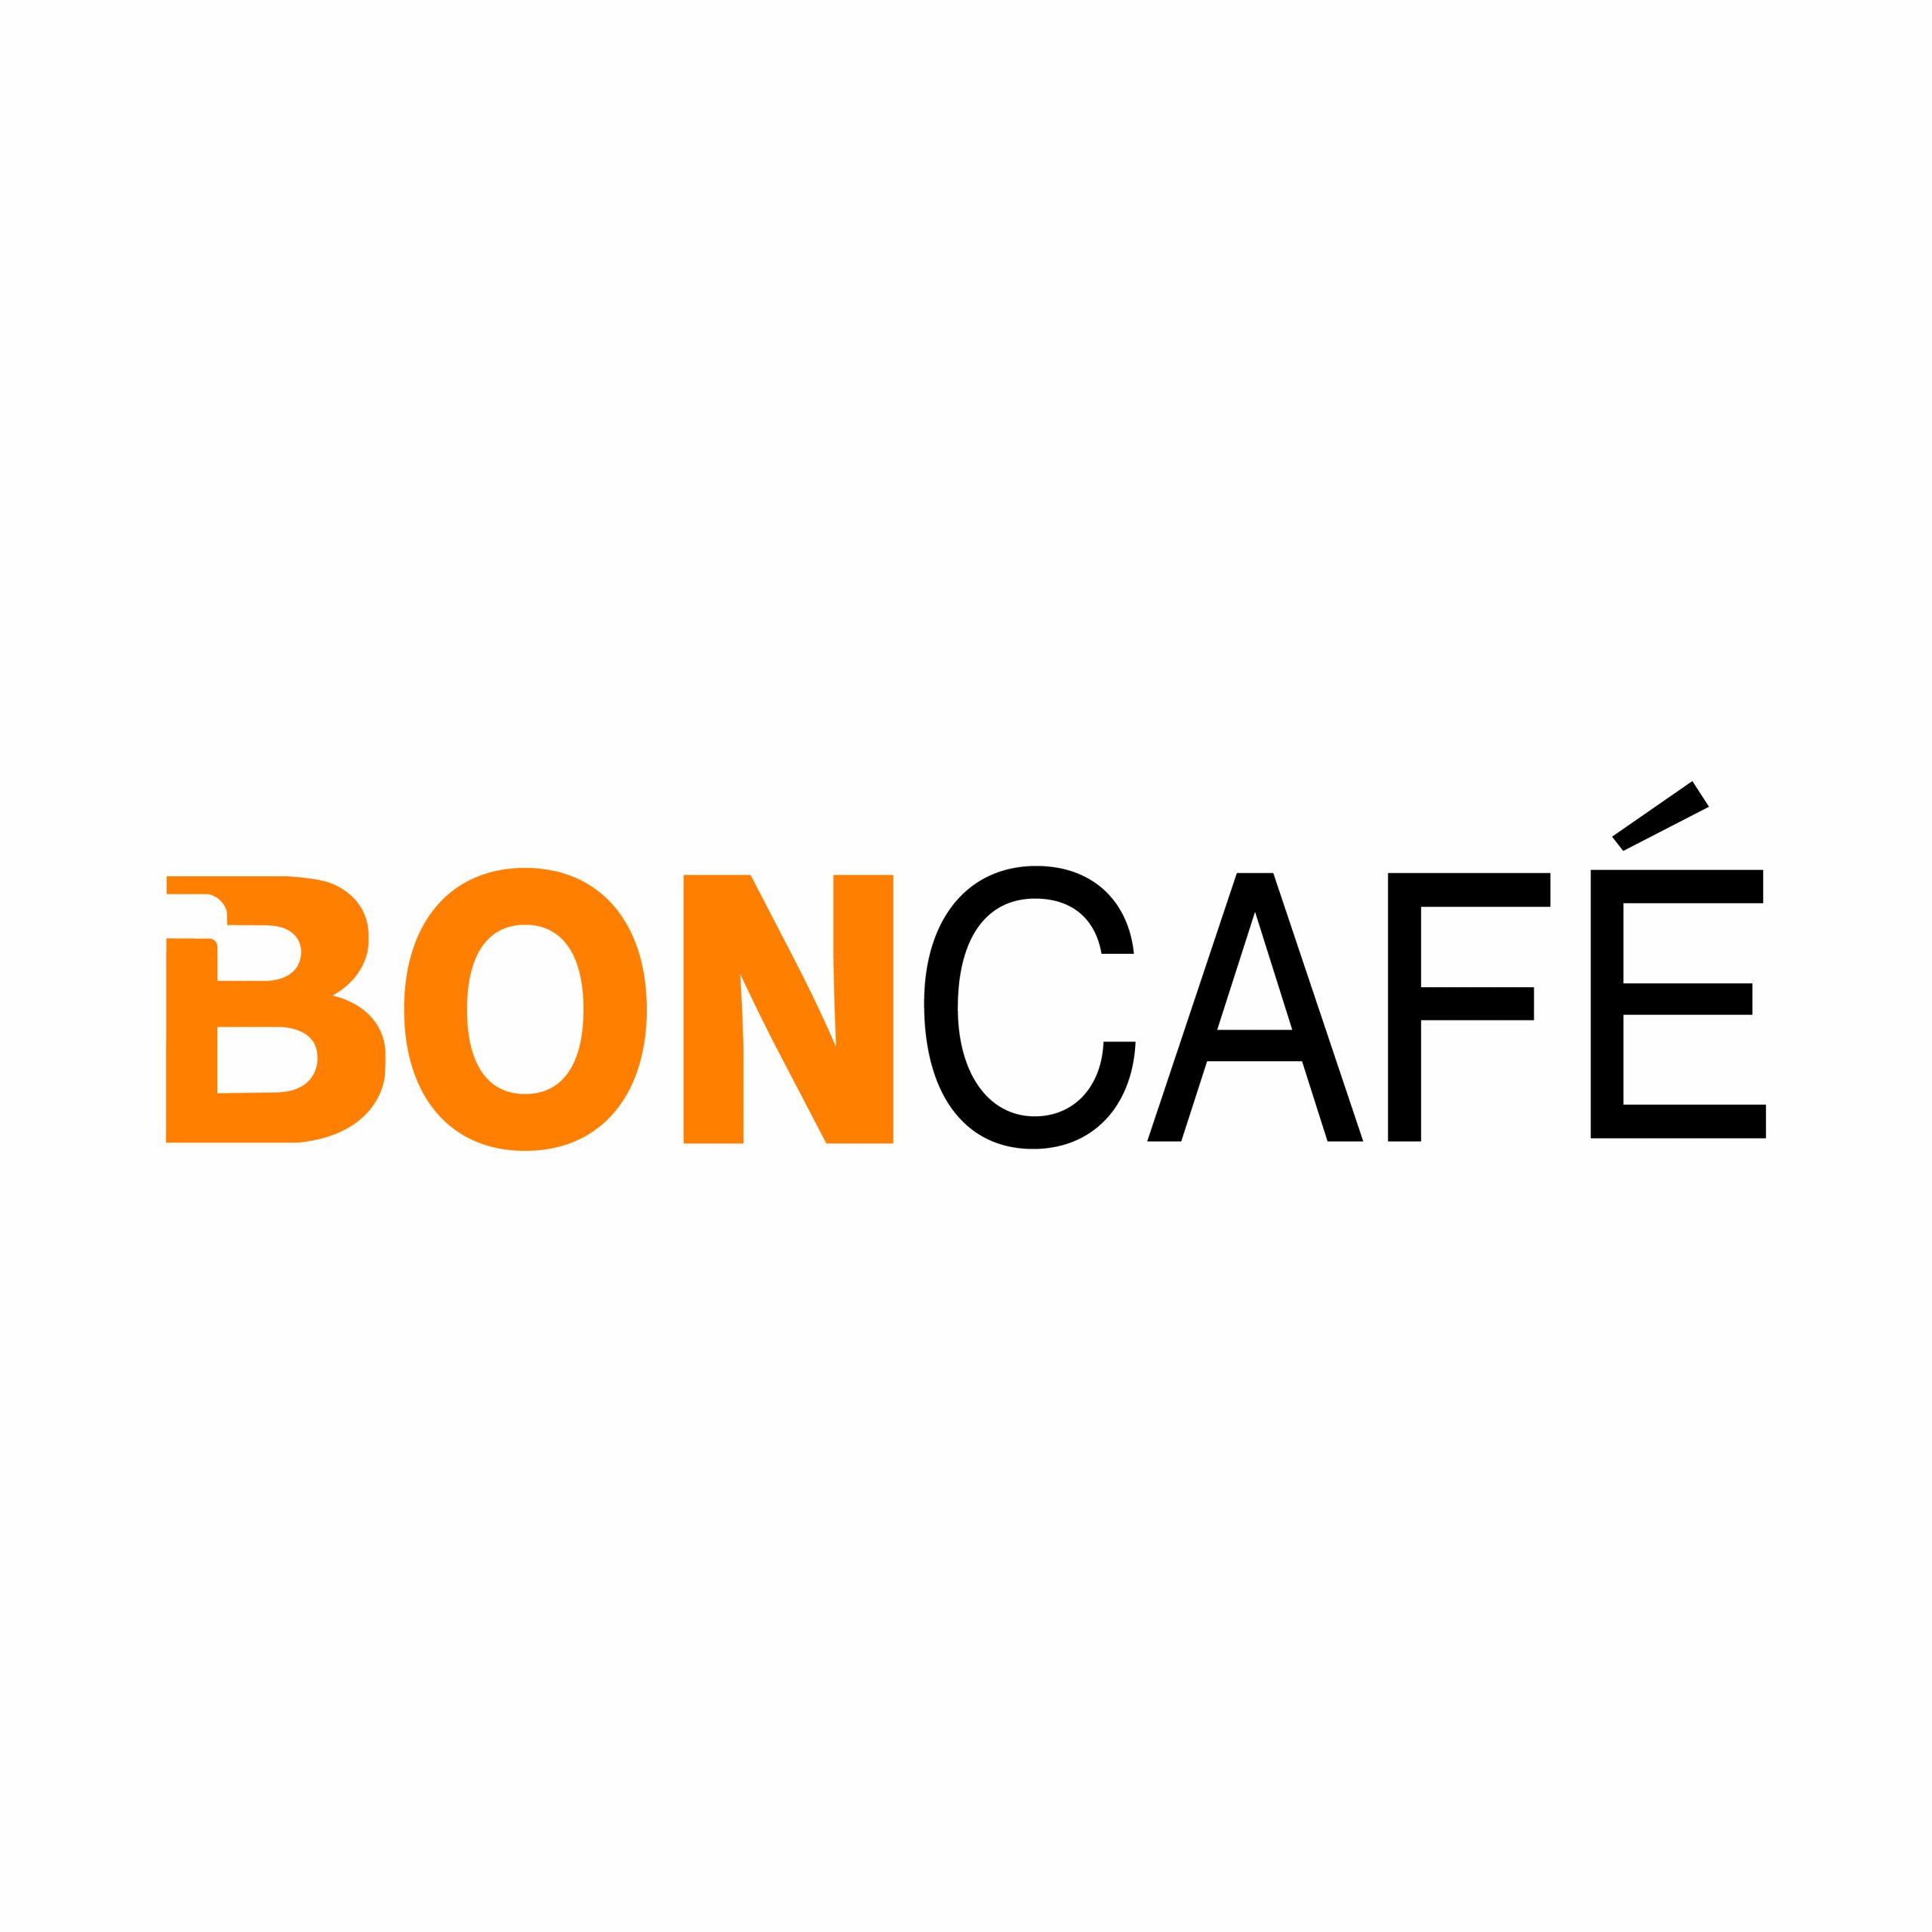 Boncafe